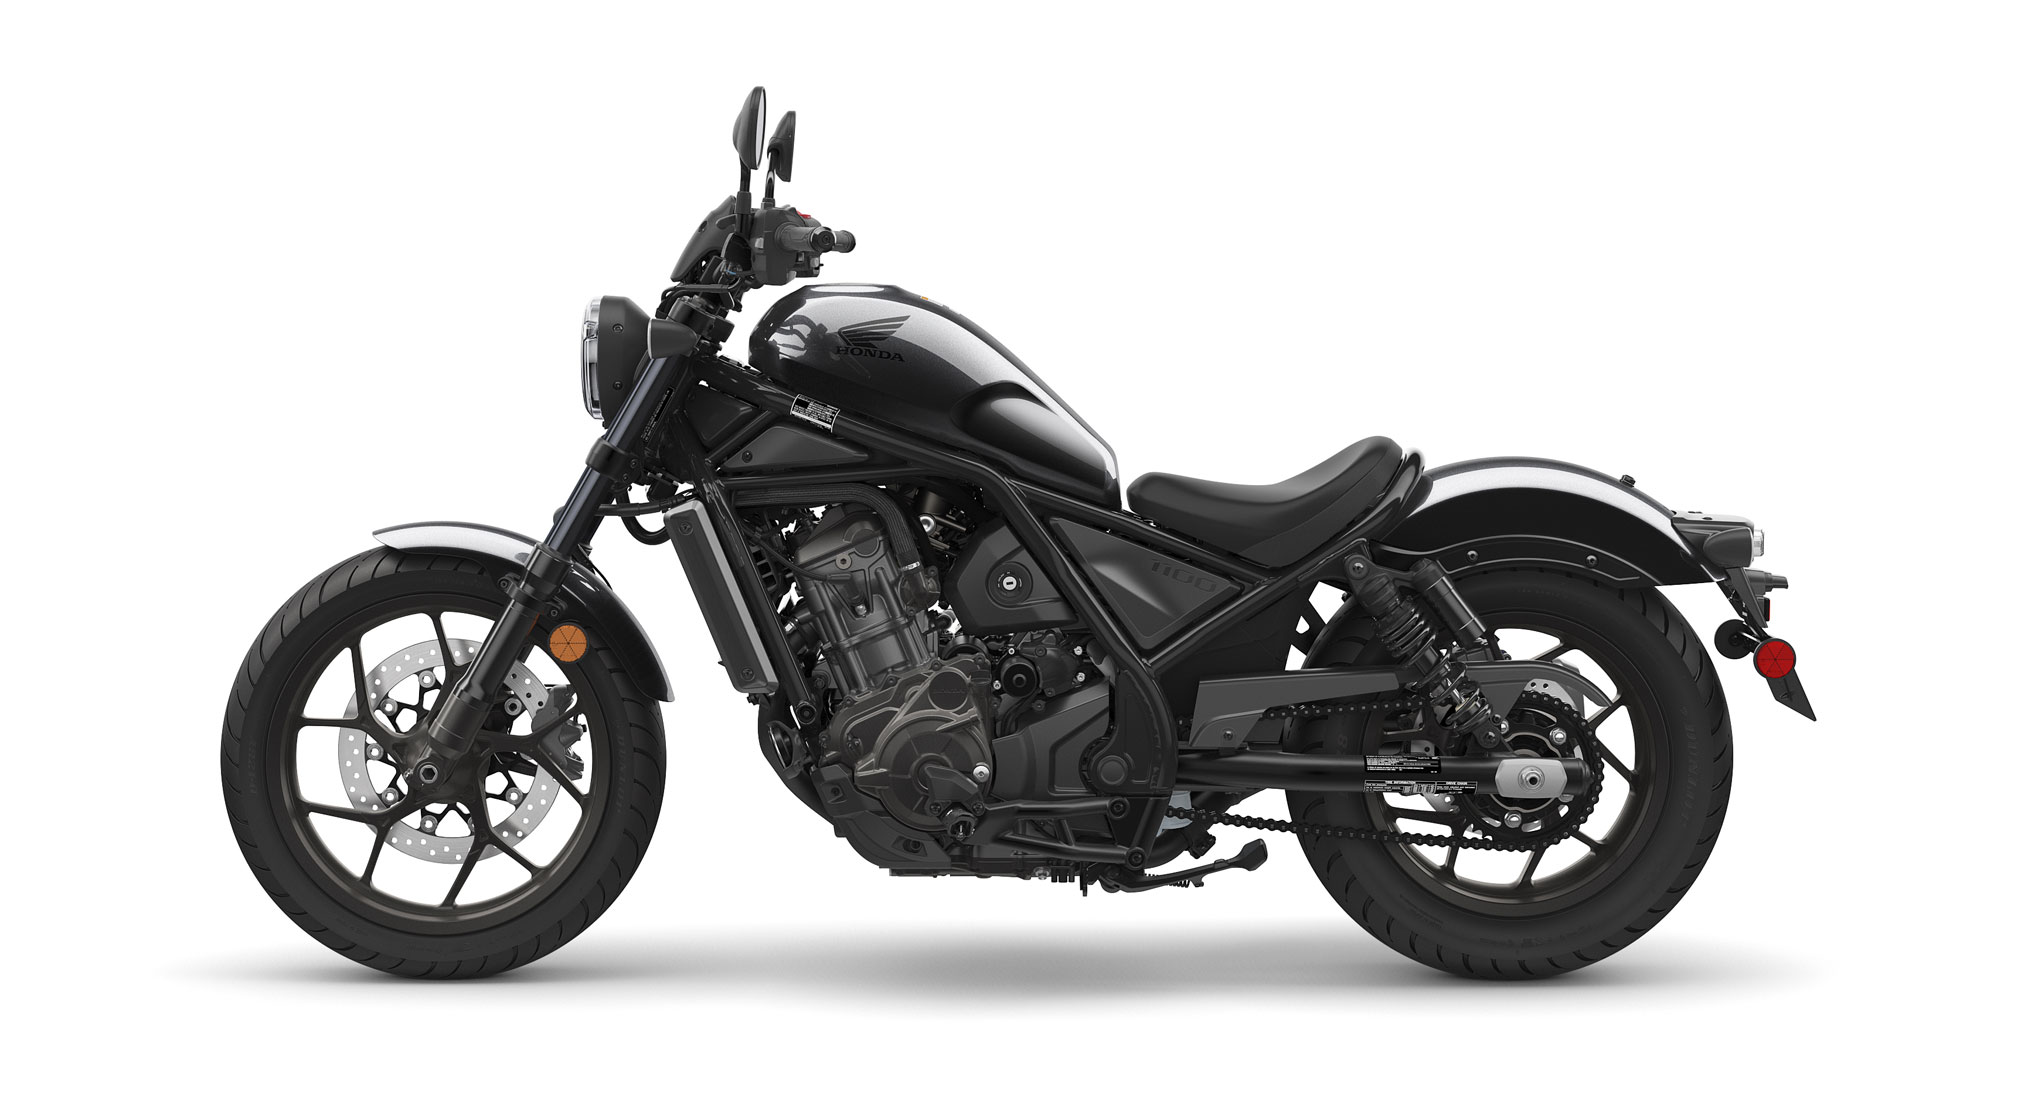 2021 Honda Rebel 1100 DCT Guide • Total Motorcycle